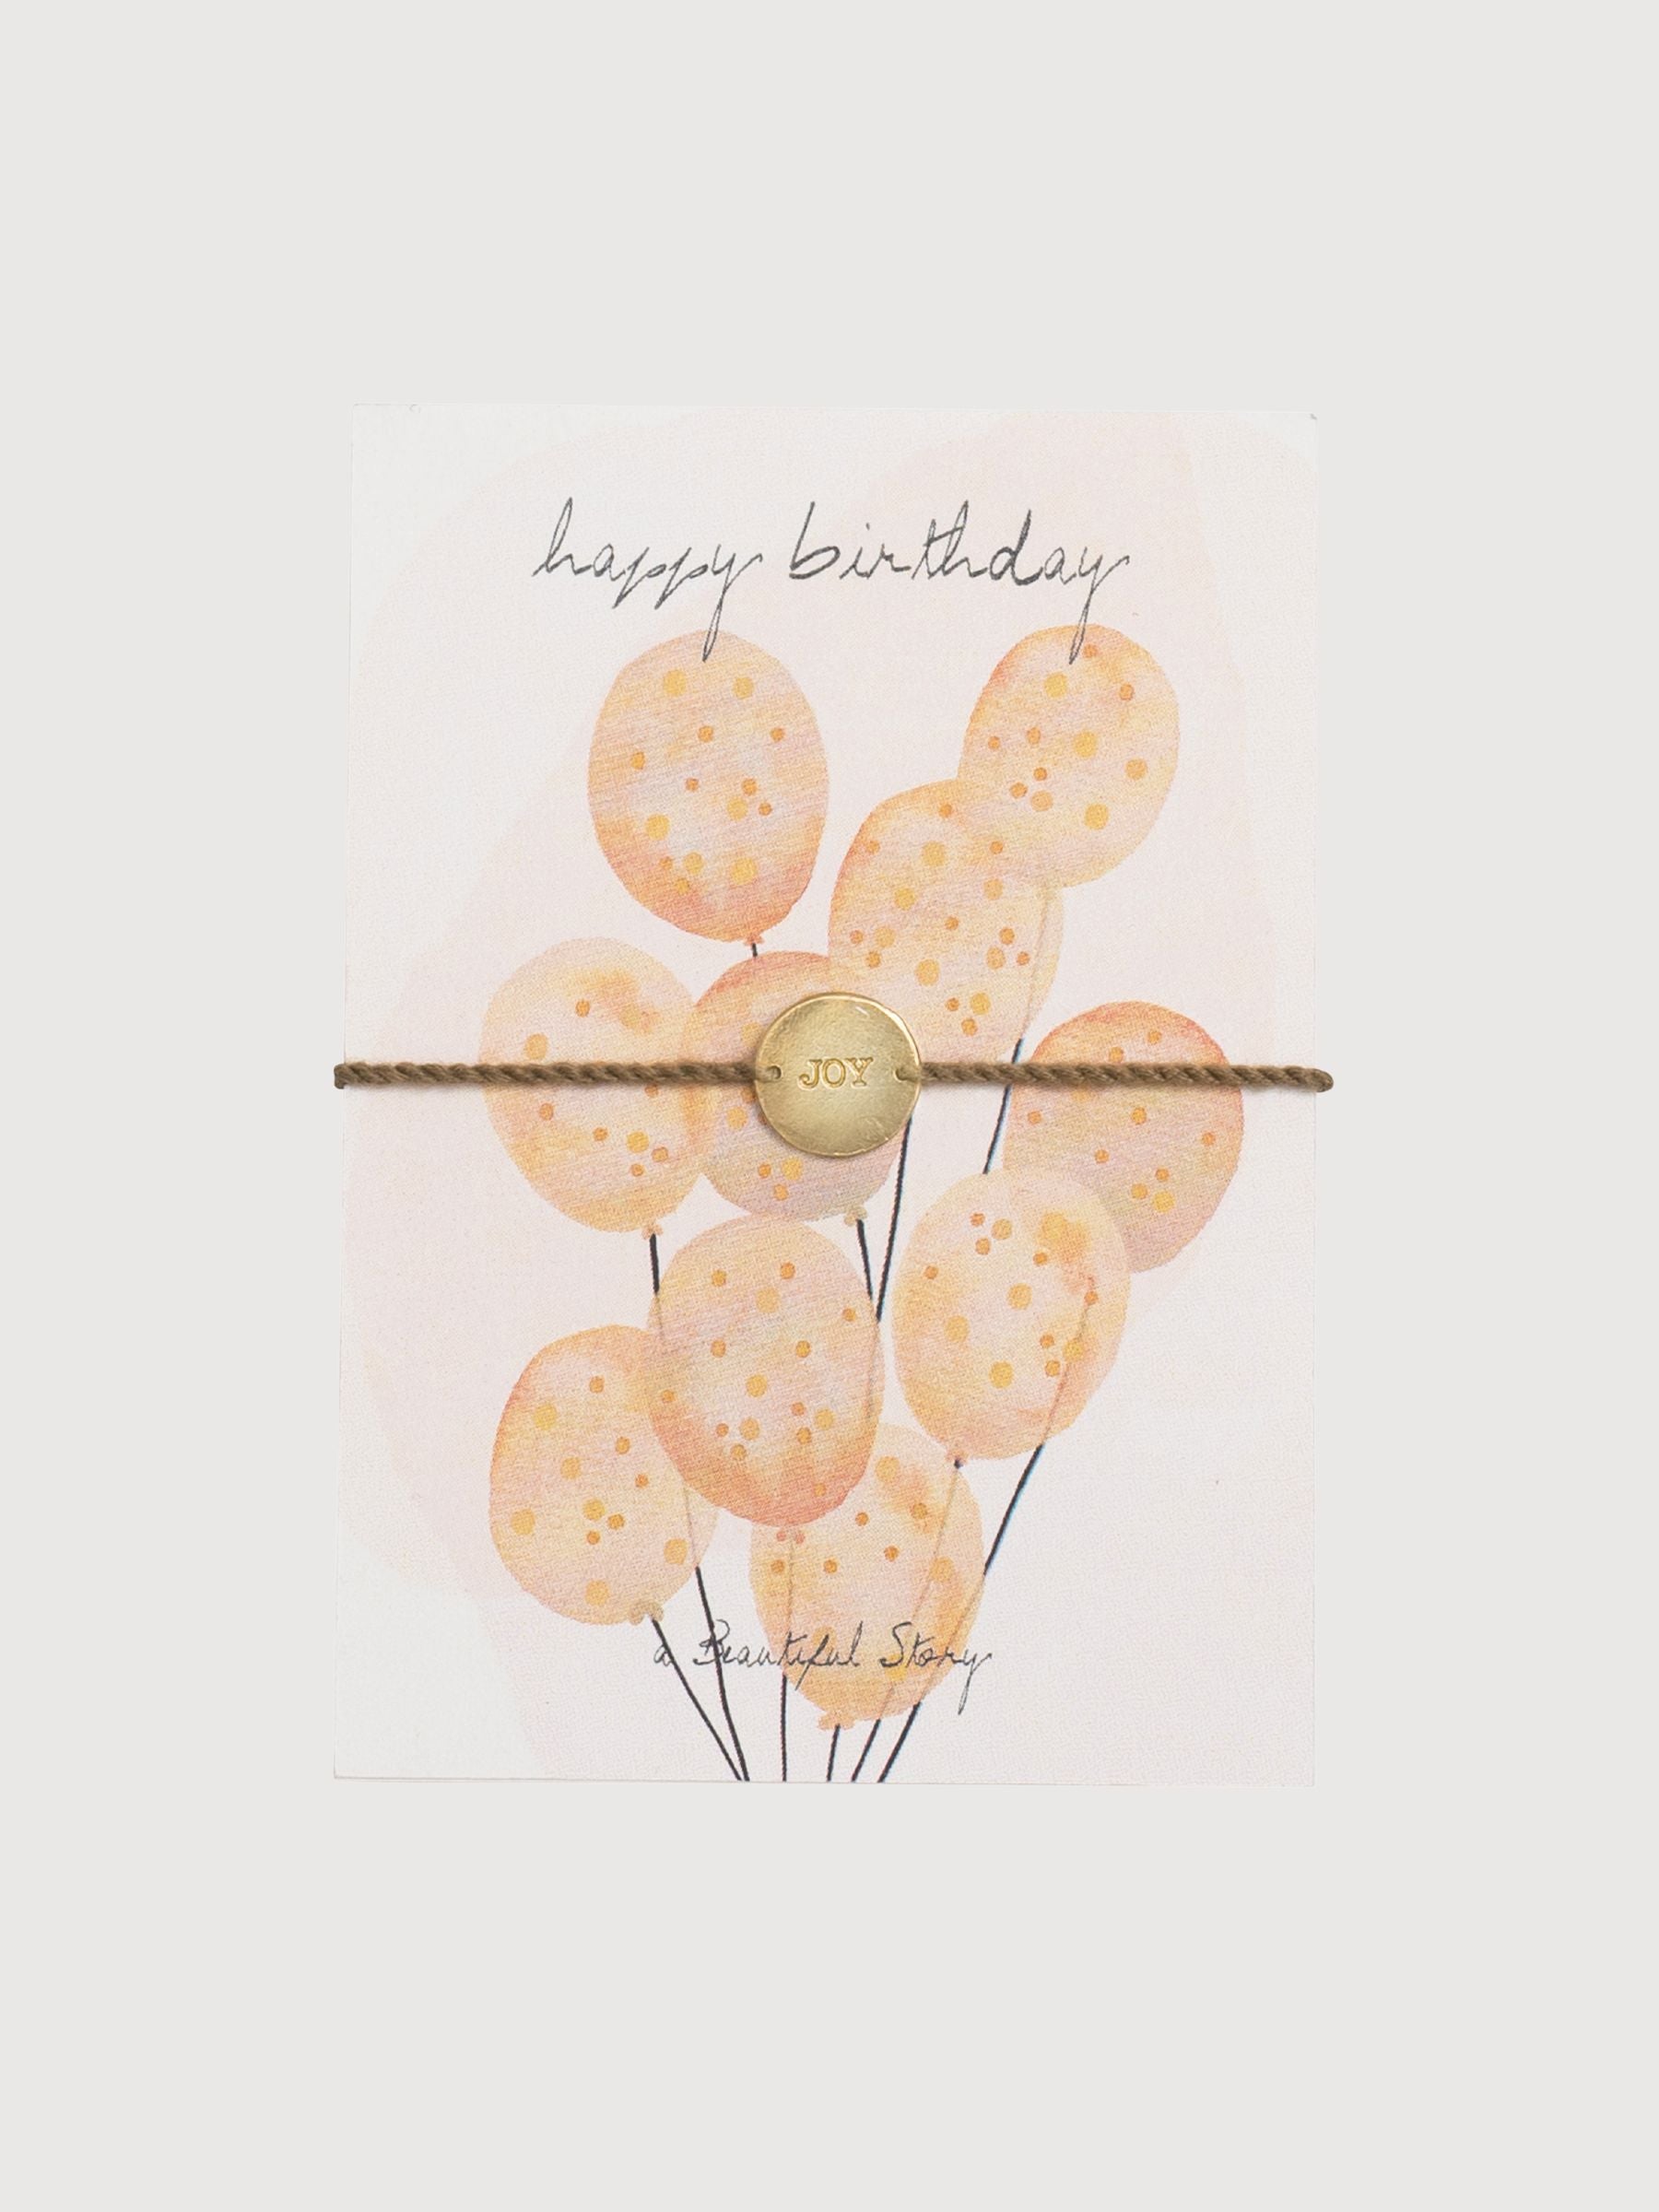 Bracelet Postcard Birthday | A Beautiful Story